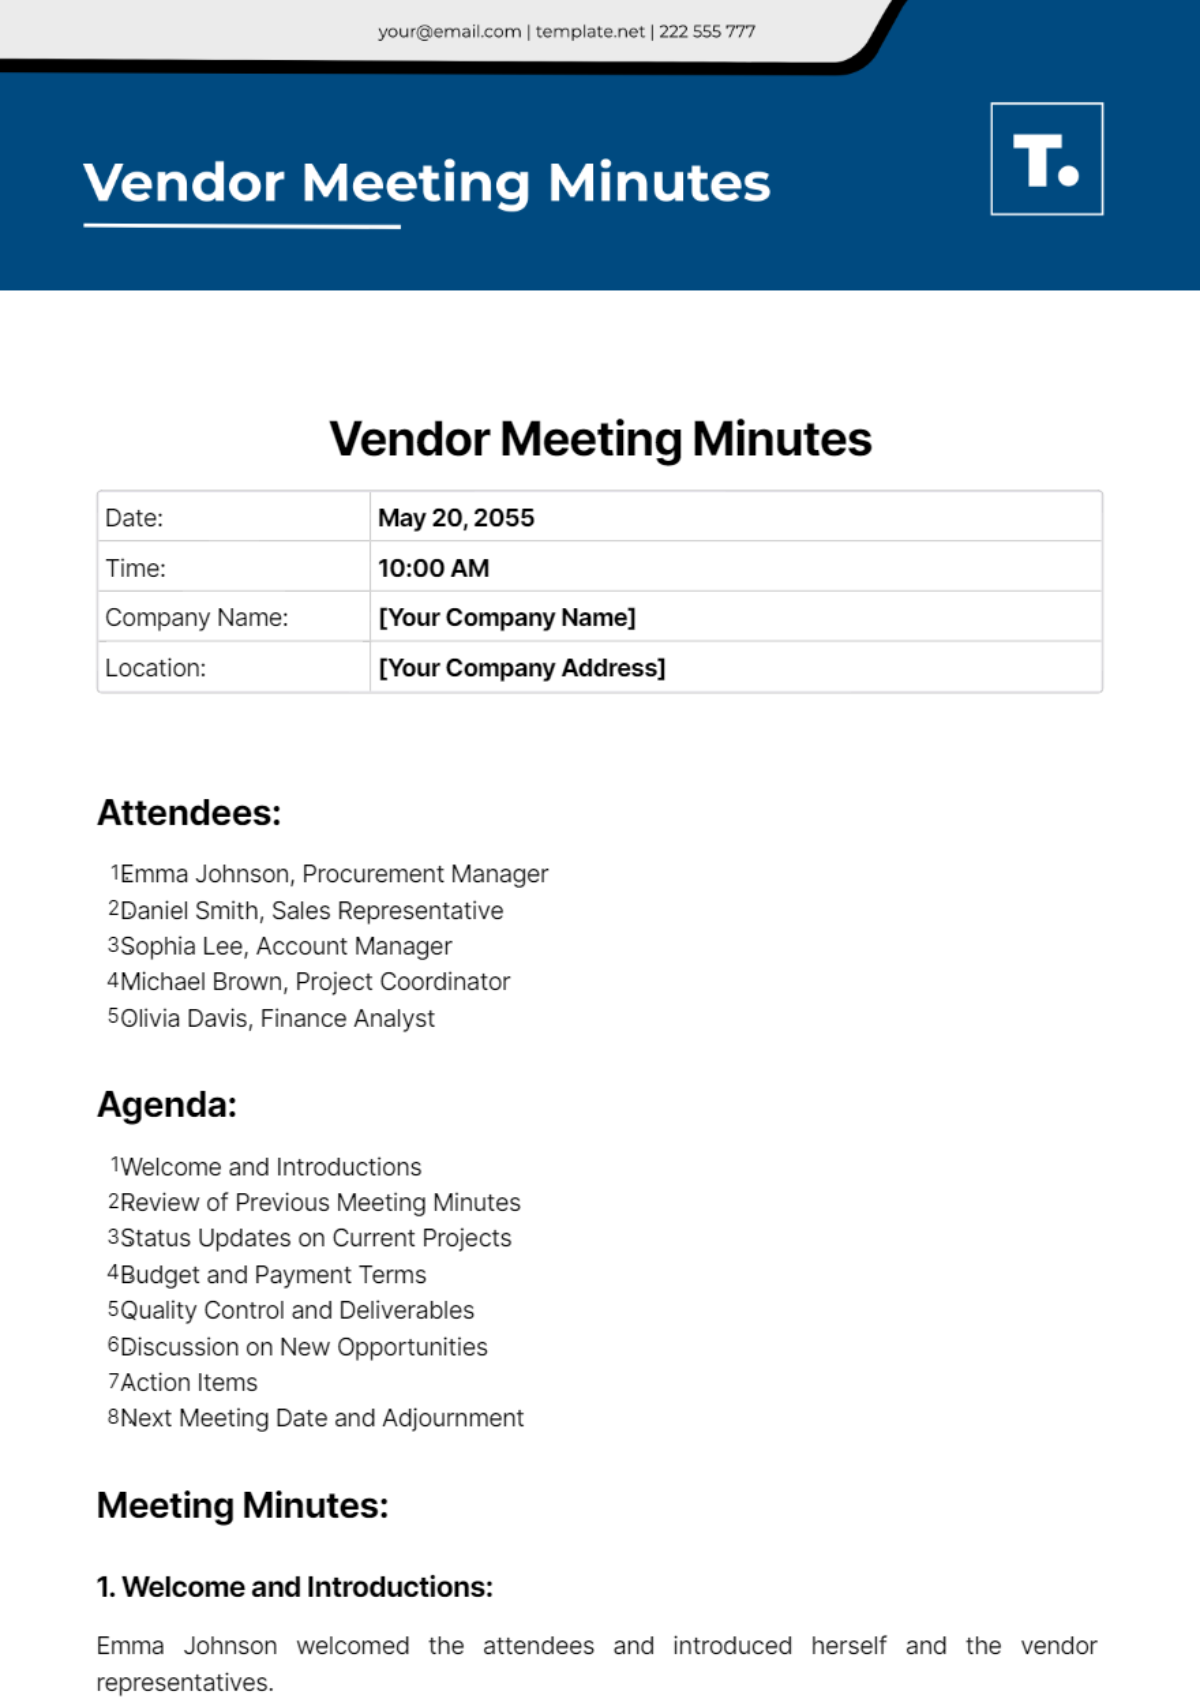 Vendor Meeting Minutes Template